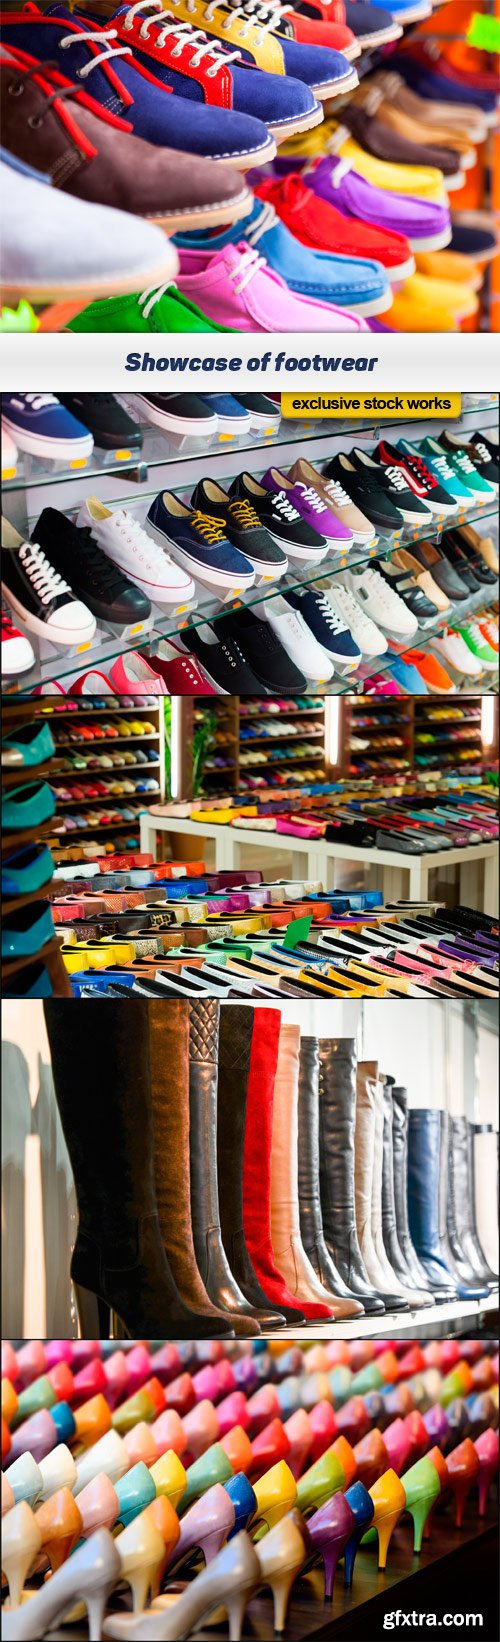 Showcase of footwear 5x JPEG